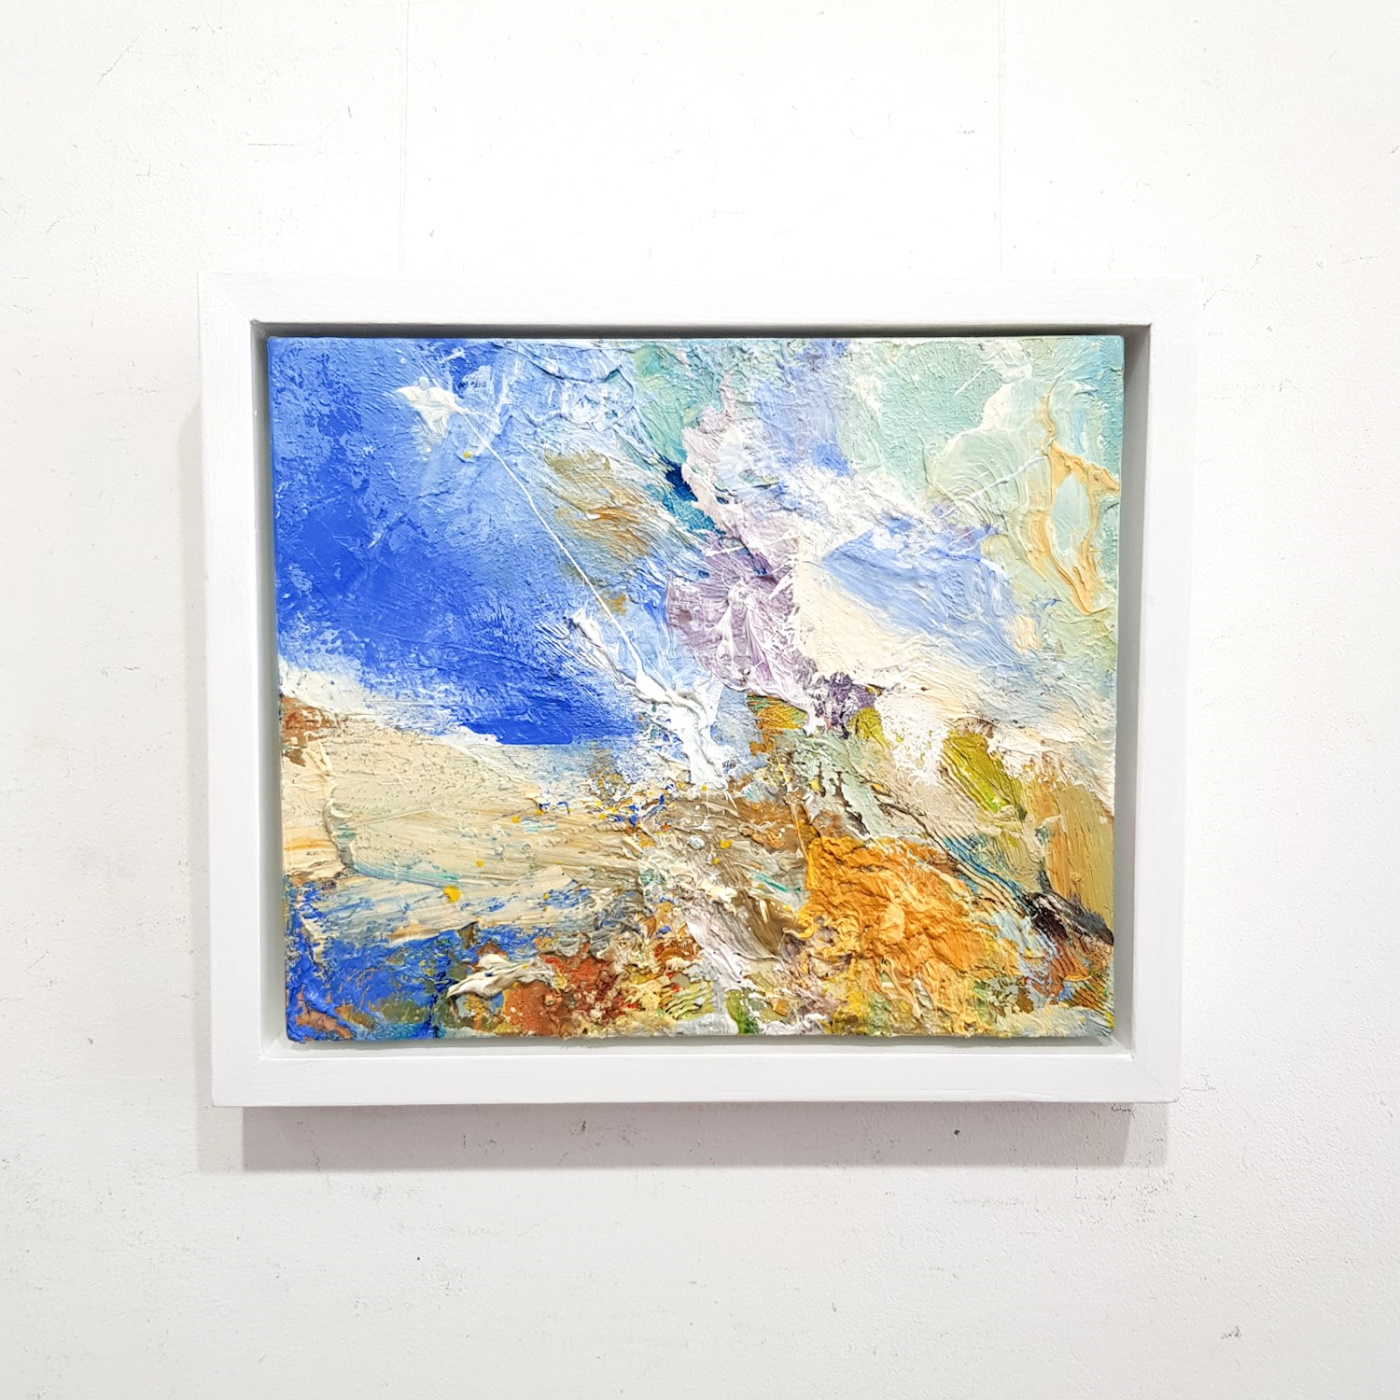 'Sand Dunes, Blue Sky, Strong Wind' by artist Matthew Bourne